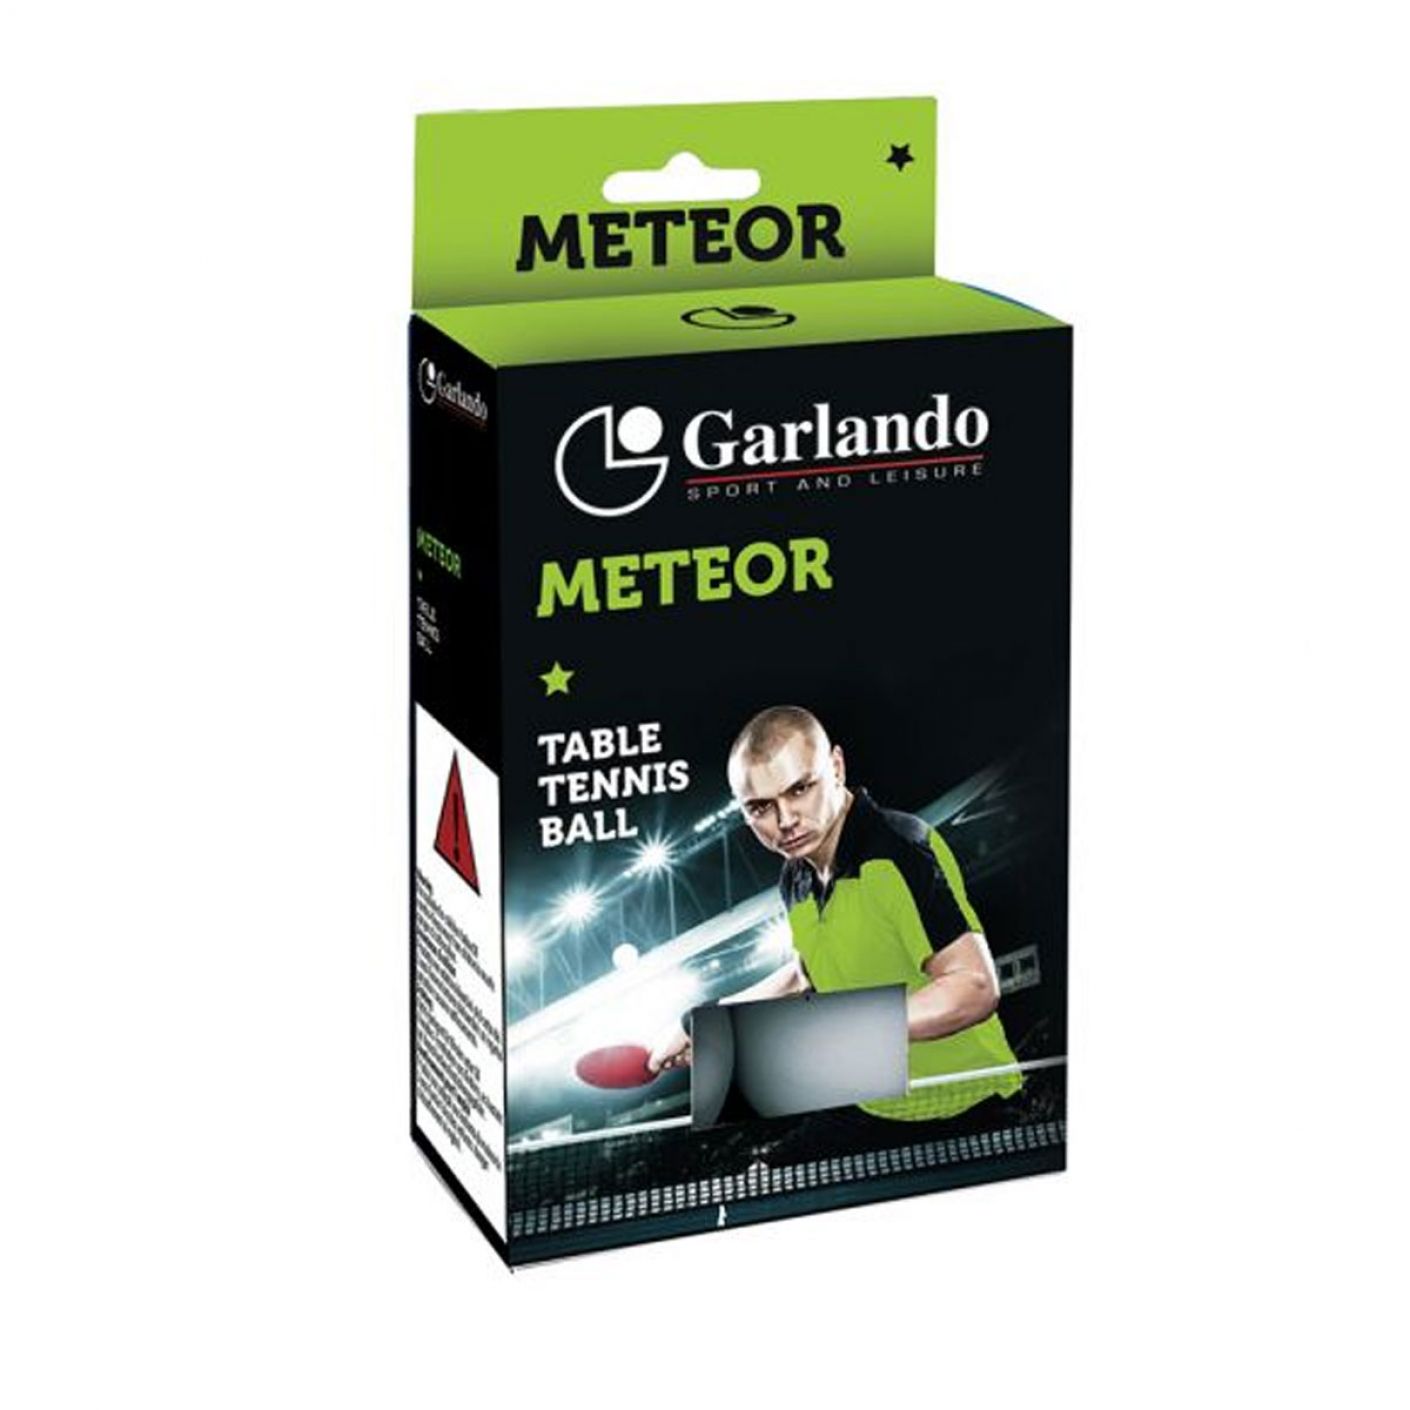 Garlando - Pack of 6 Meteor balls (1 star)